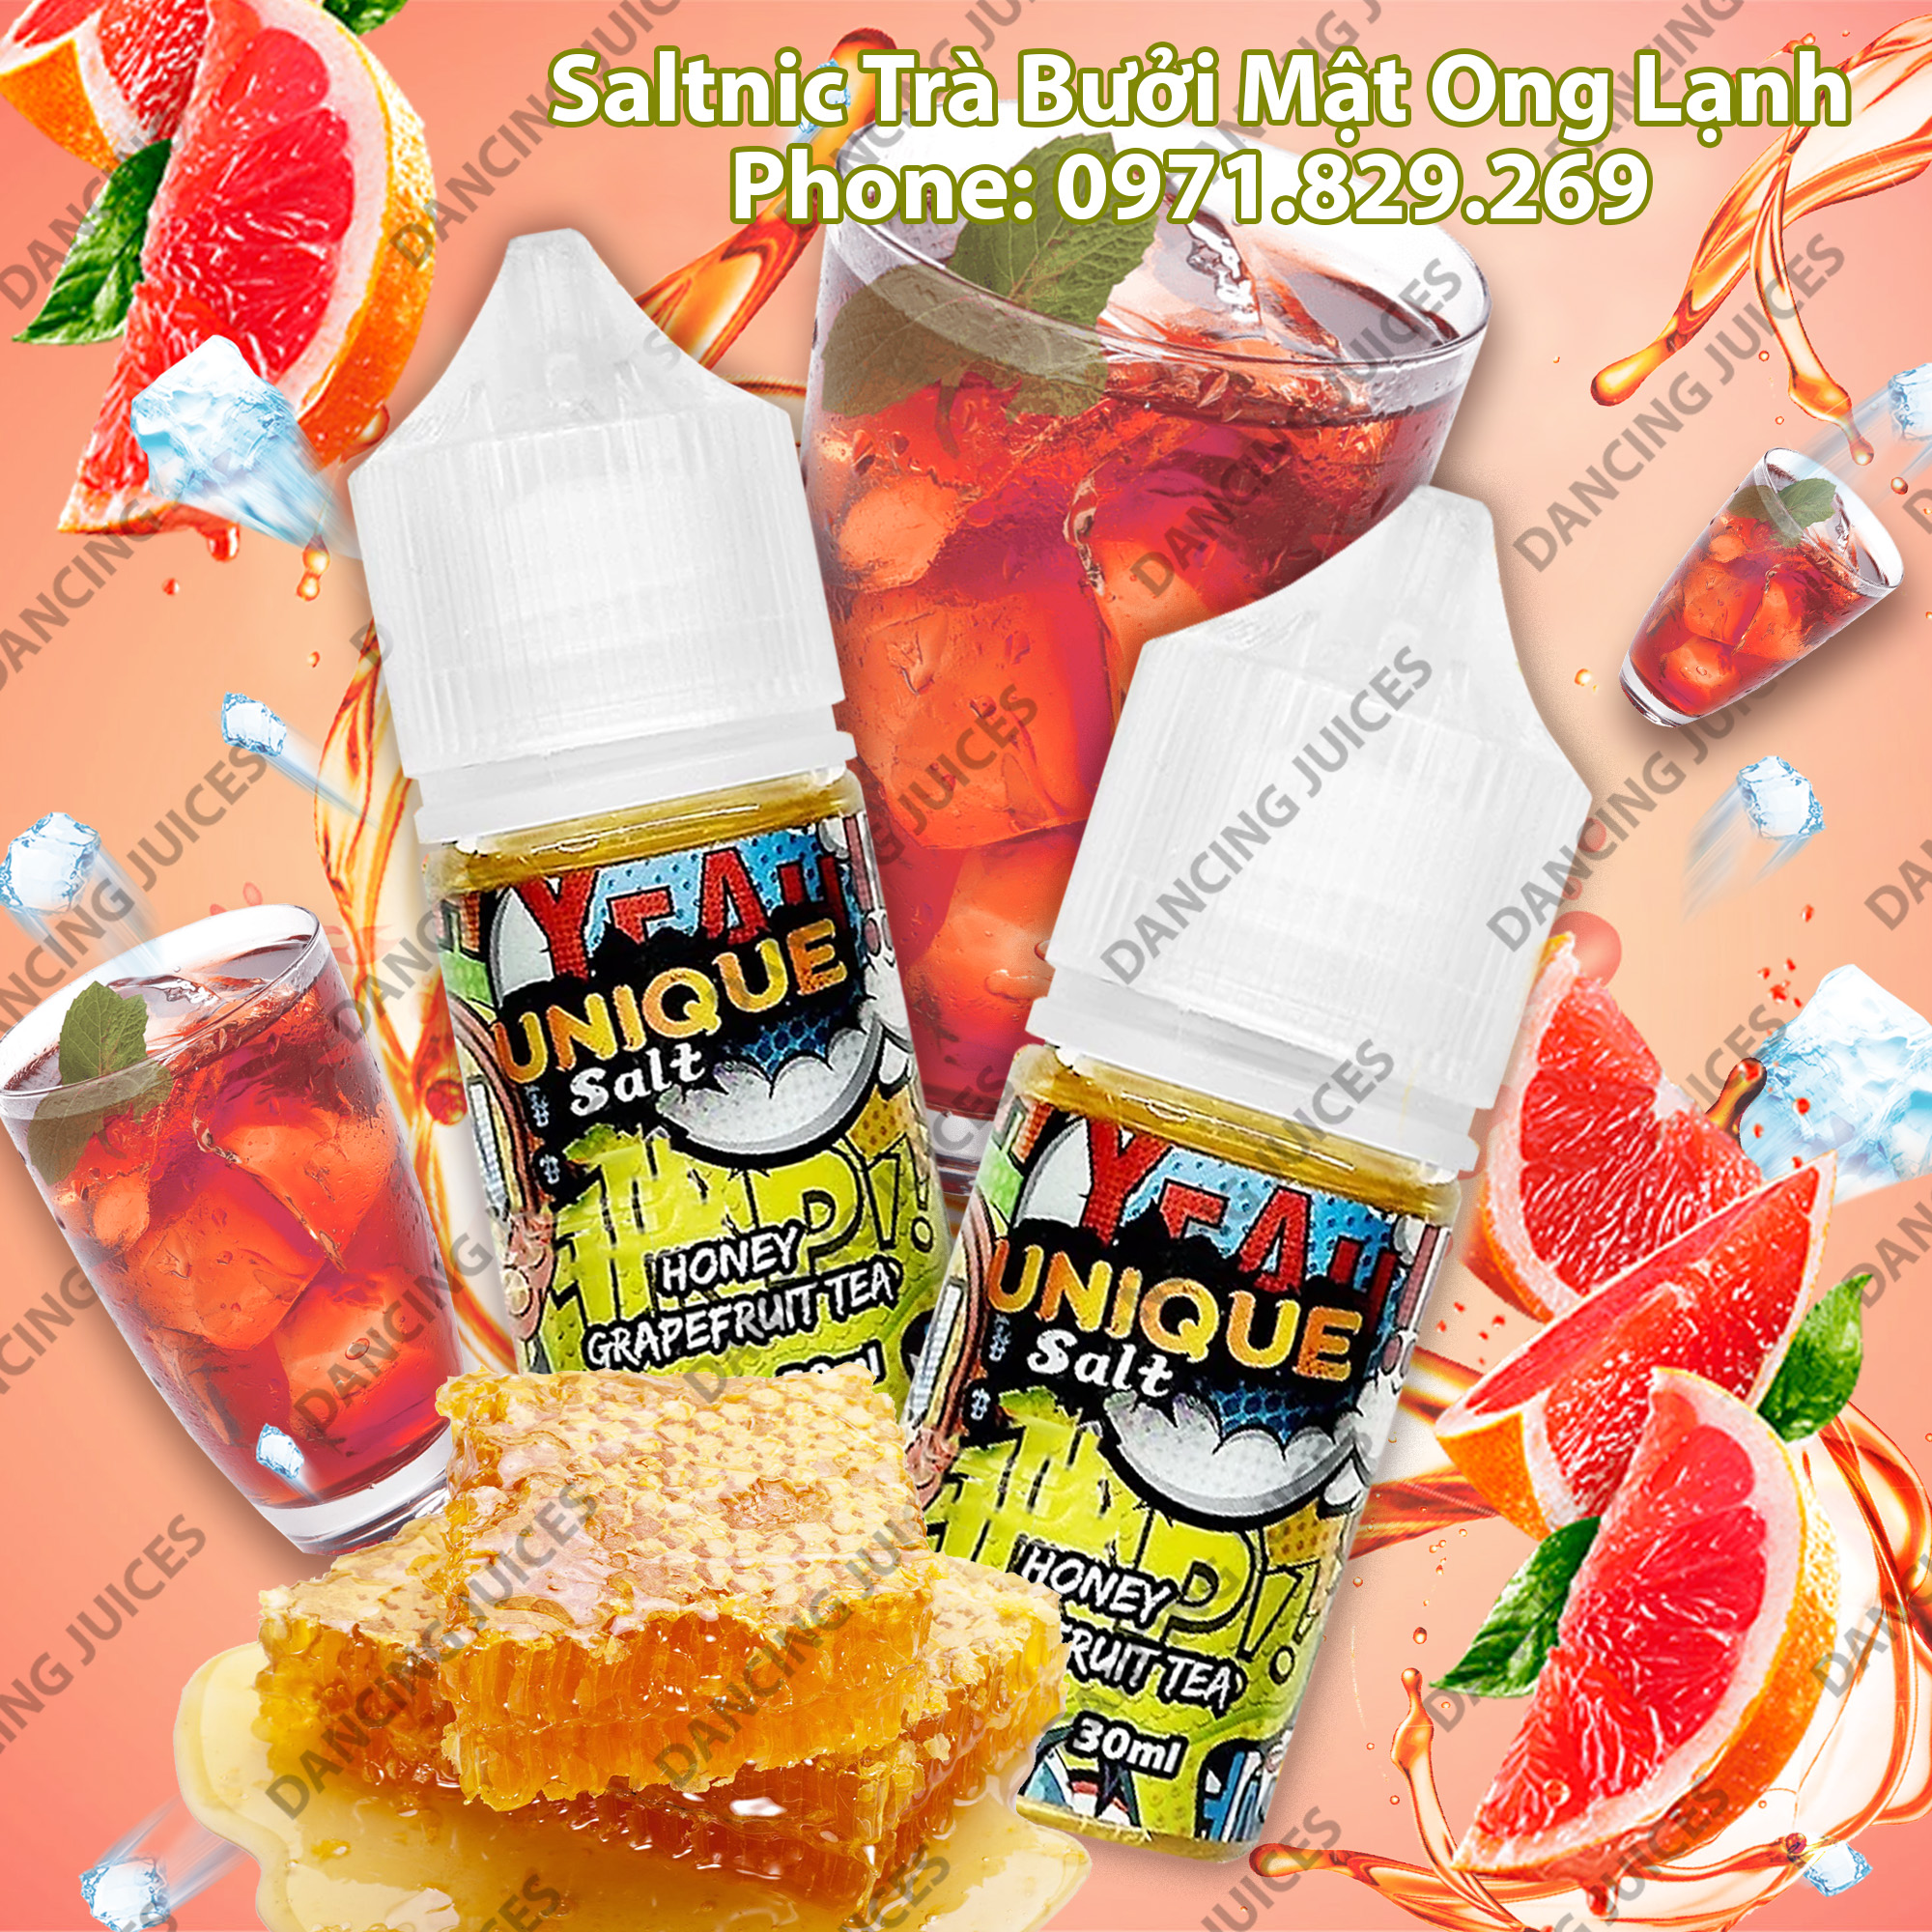 SALTNIC UNIQUE Honey Grapefruit 30ml - Tinh Dau Saltnic My Chinh Hang Phone: 0971.829.269